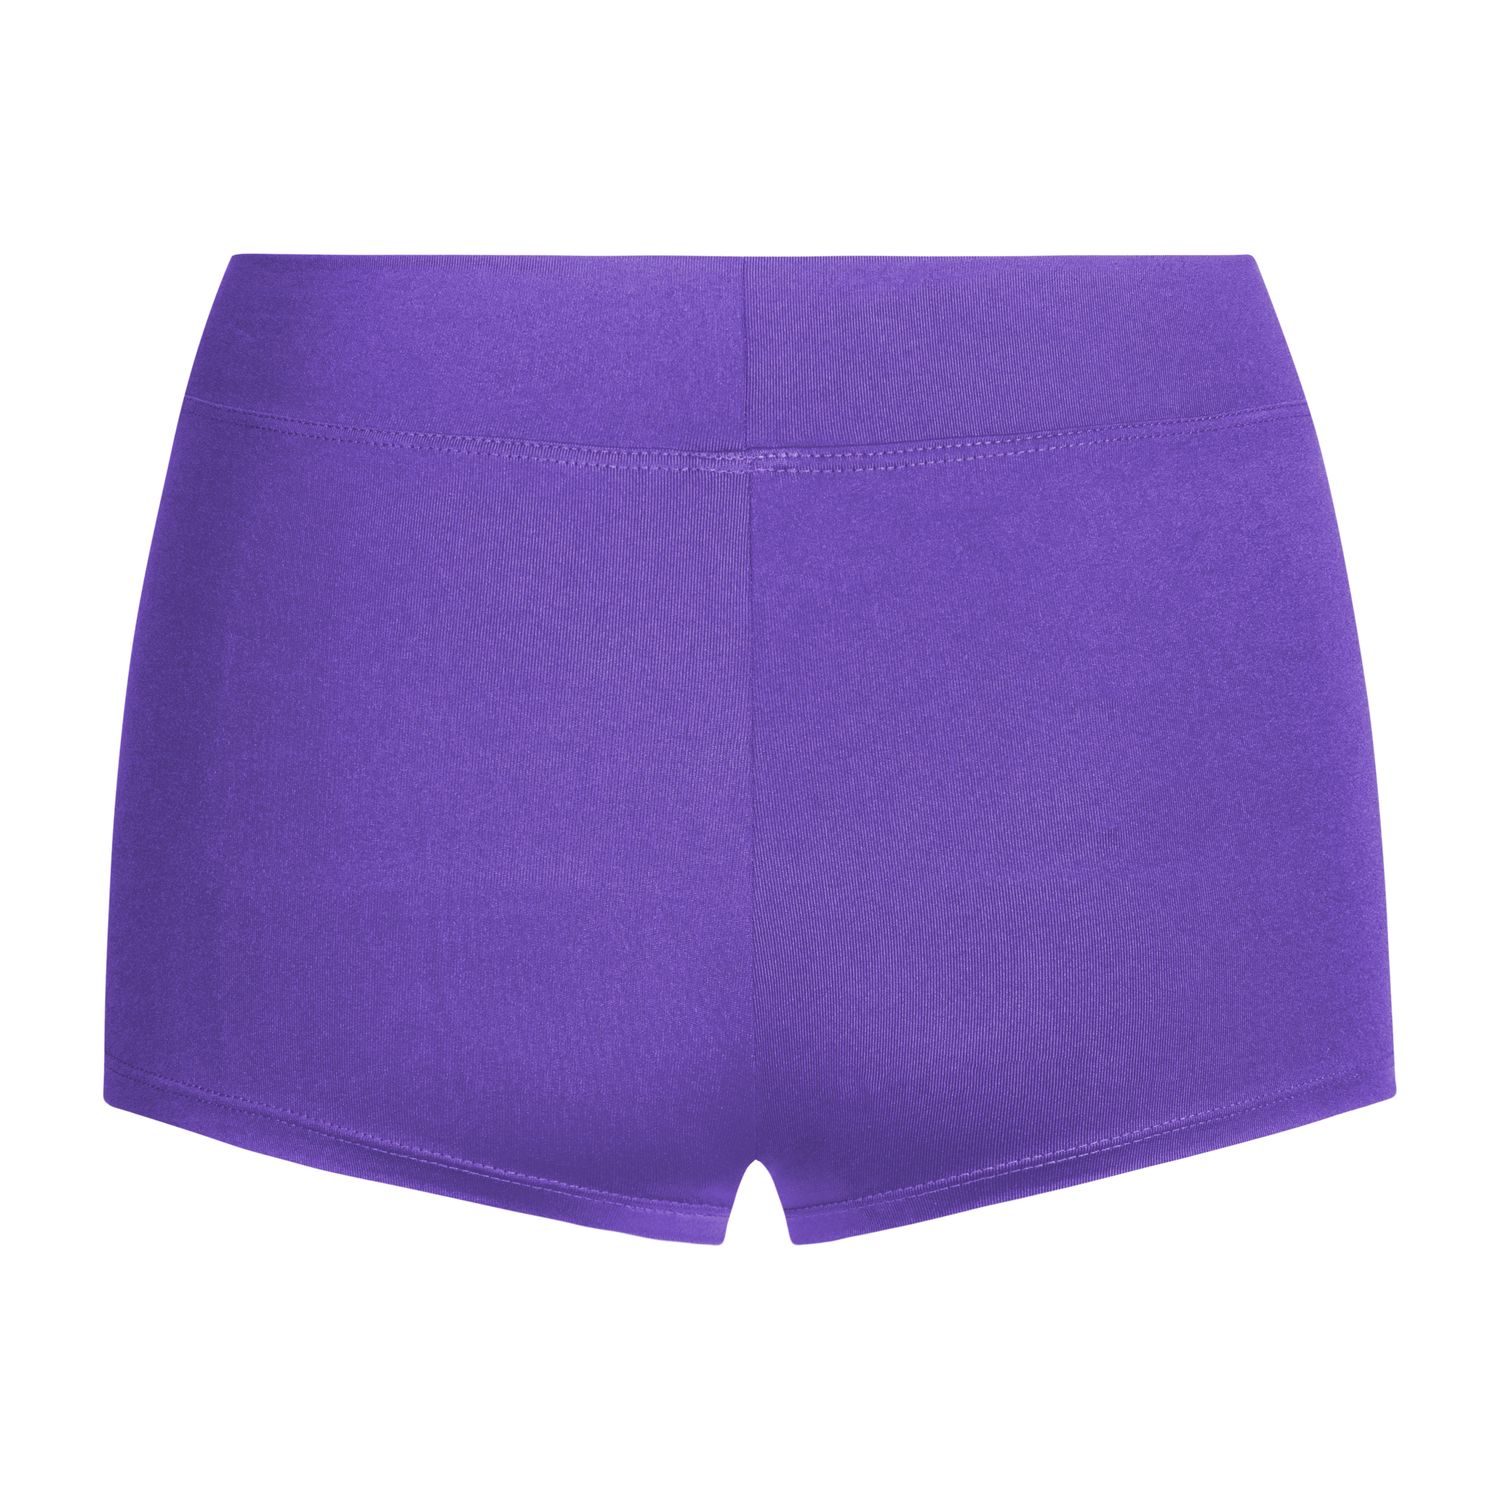 Ladies shorts SL80